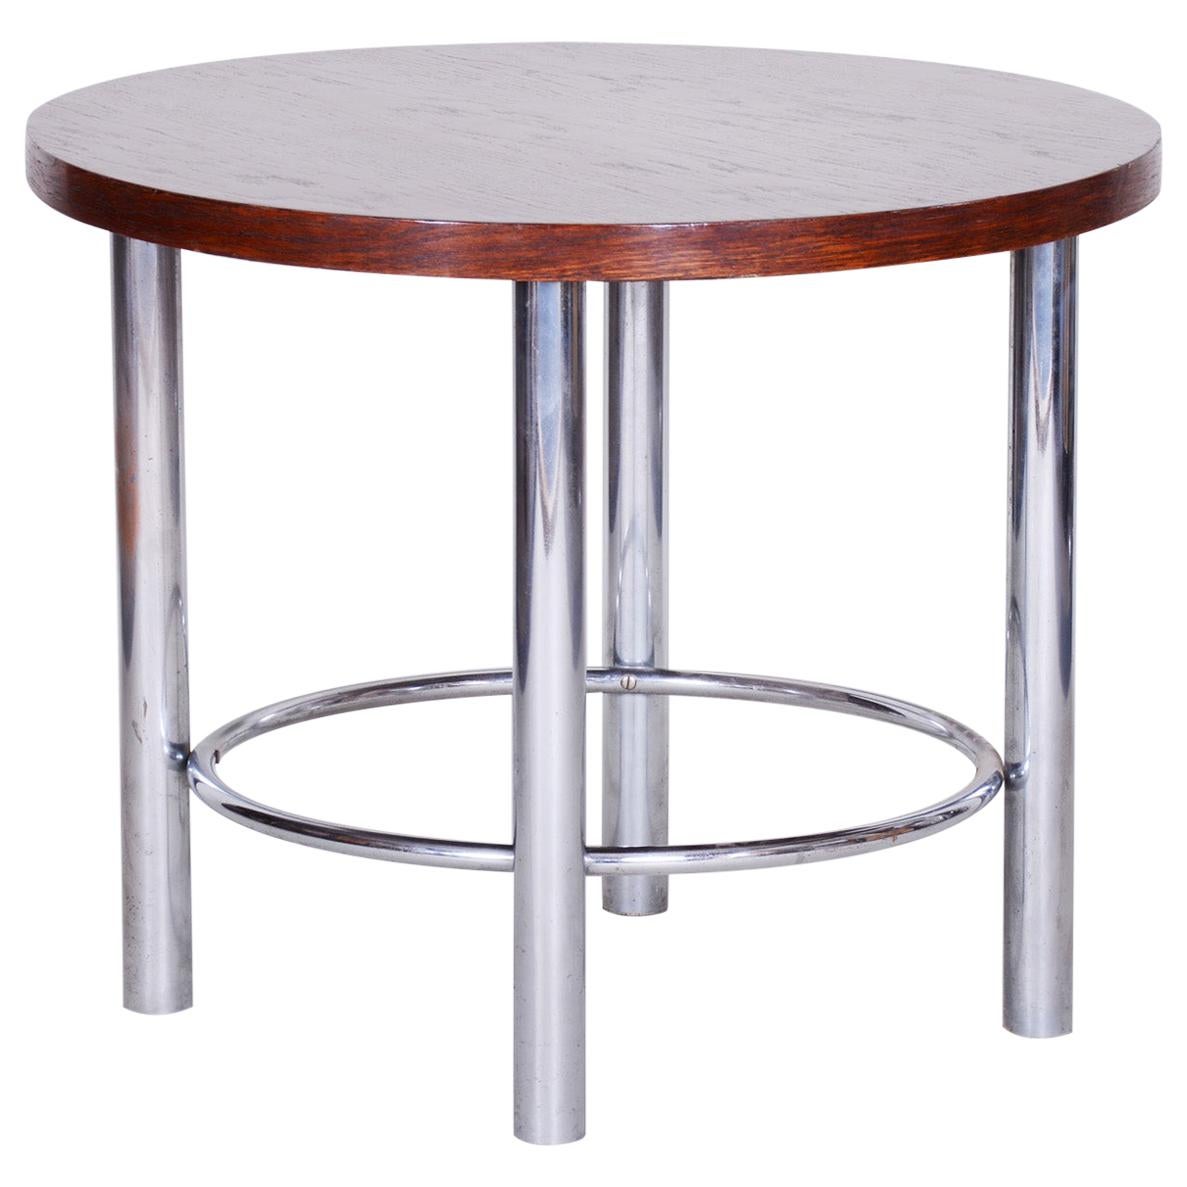 Restored Czech Round Oak Bauhaus Table by Mücke & Melder, Chrome, 1930s